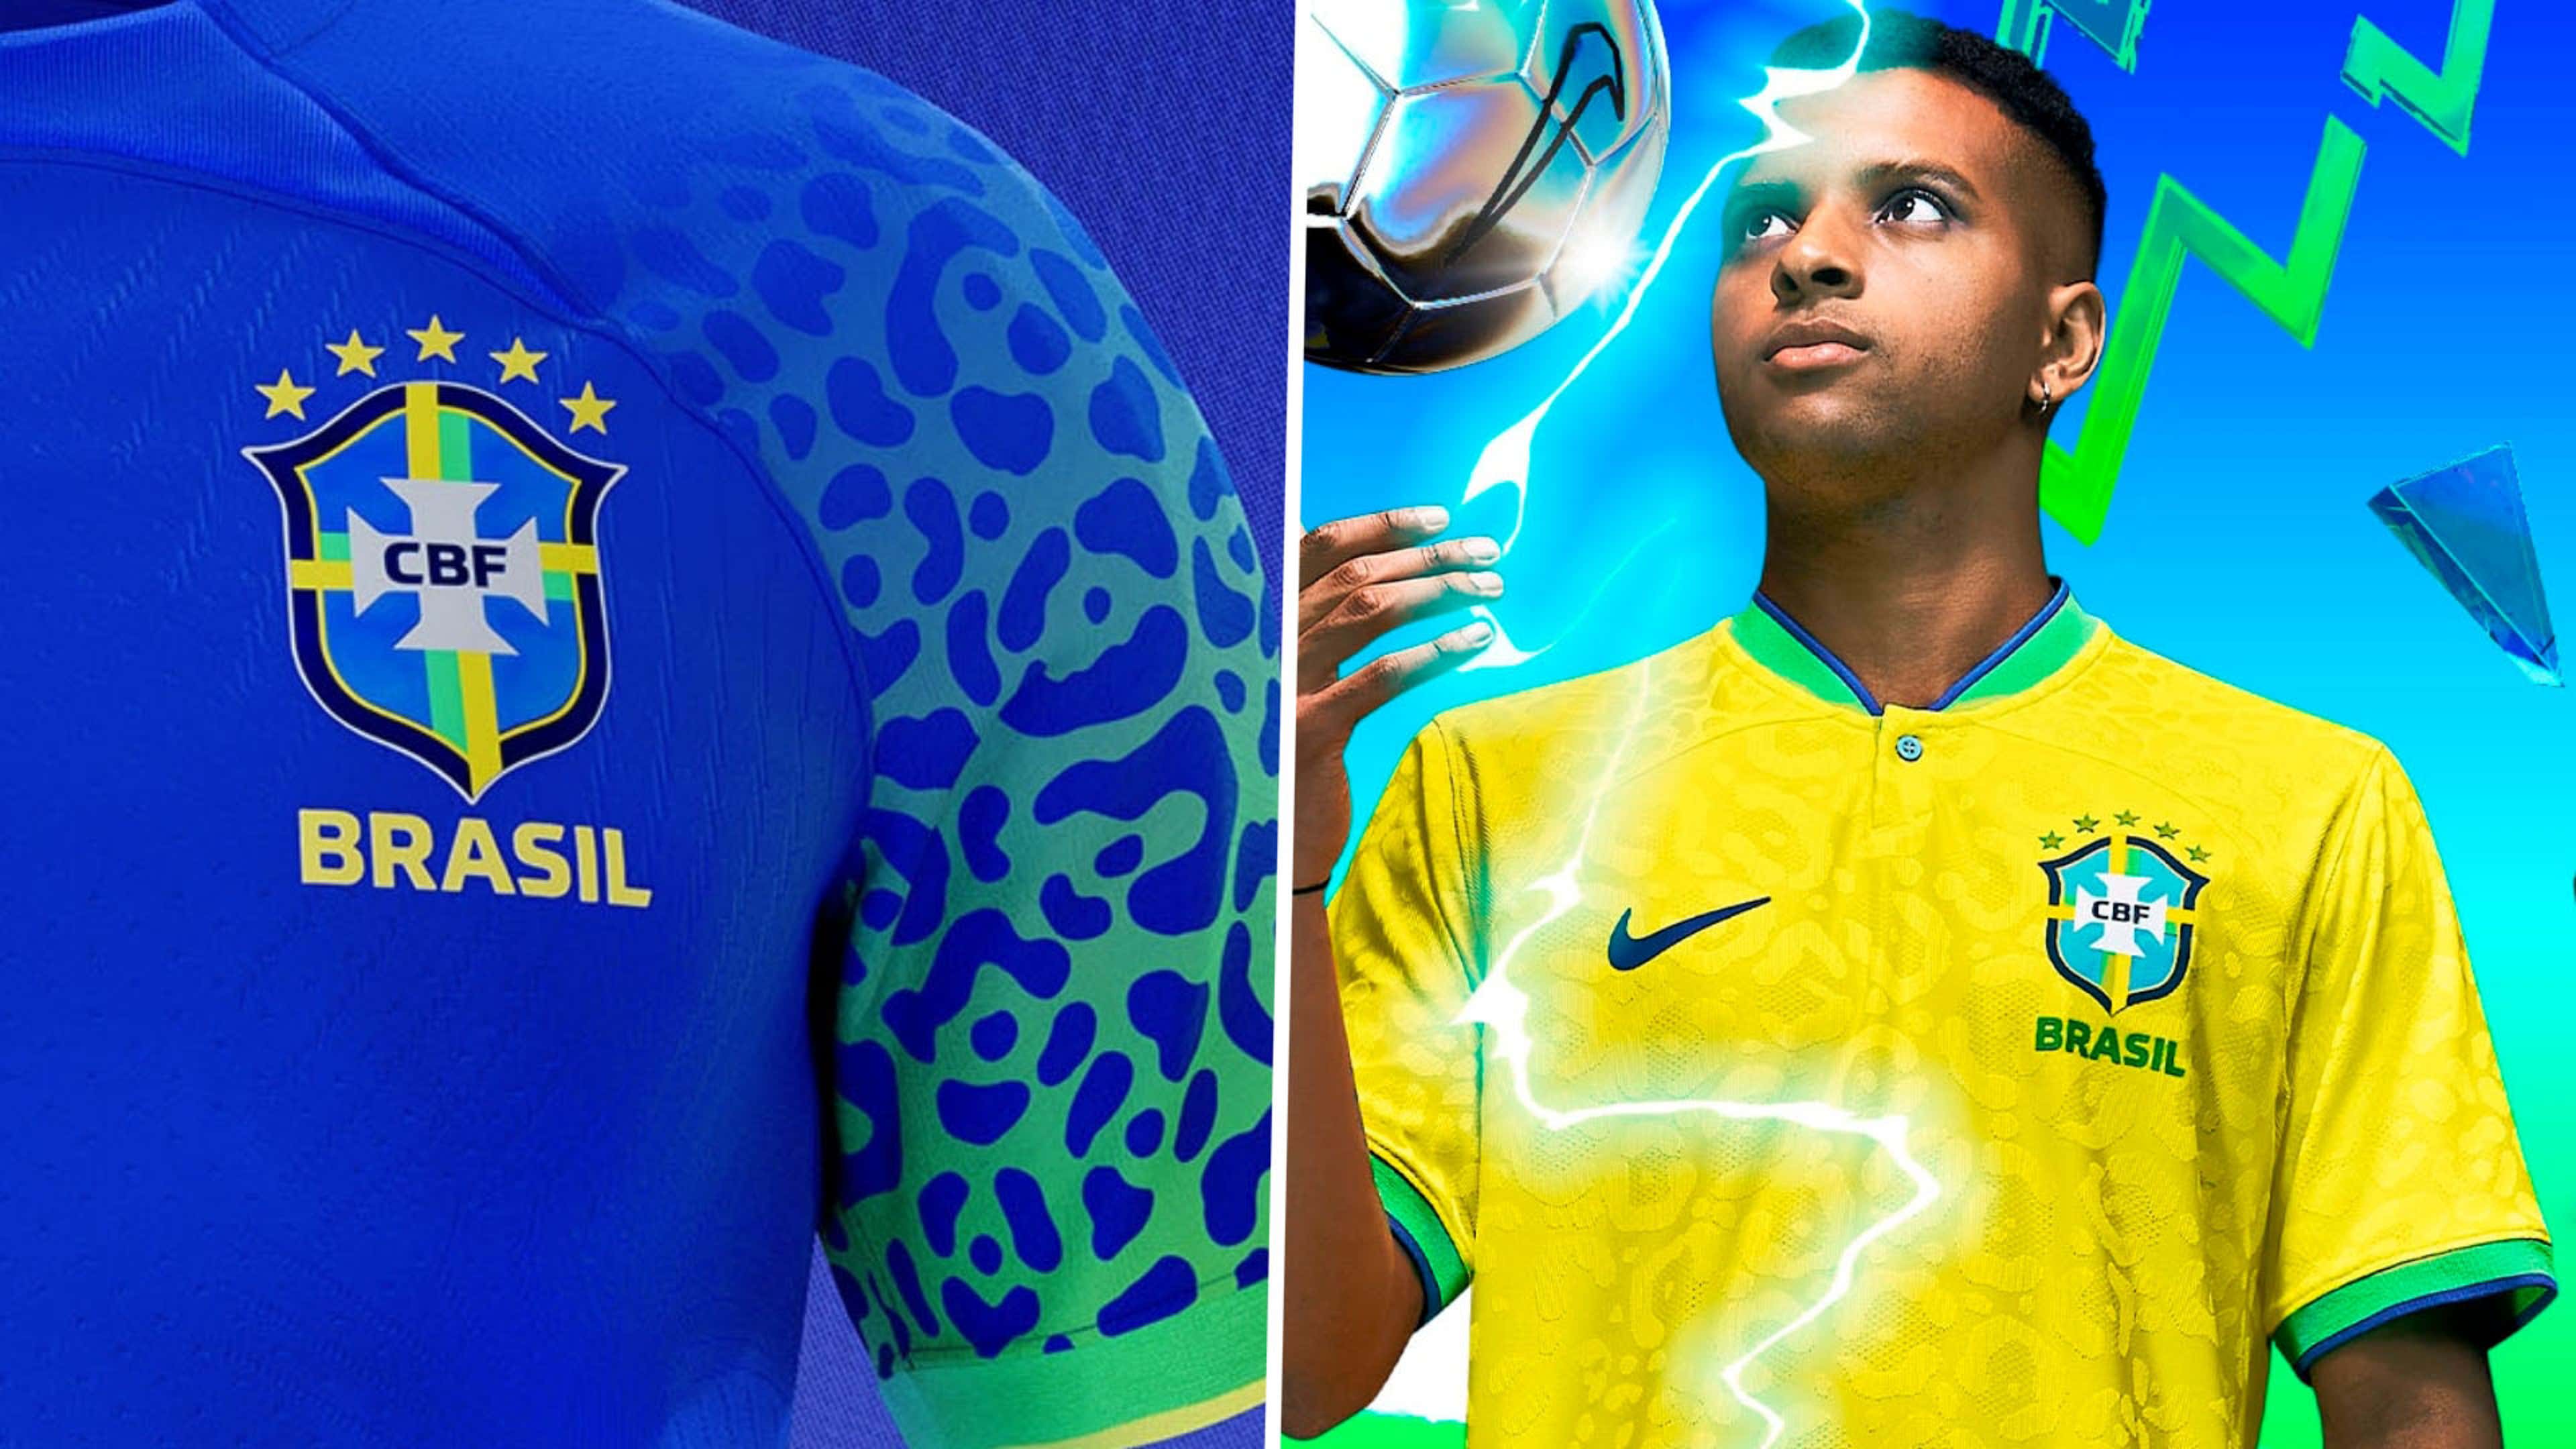 Site divulga suposta imagem da camisa n°2 do Brasil CBF na cor